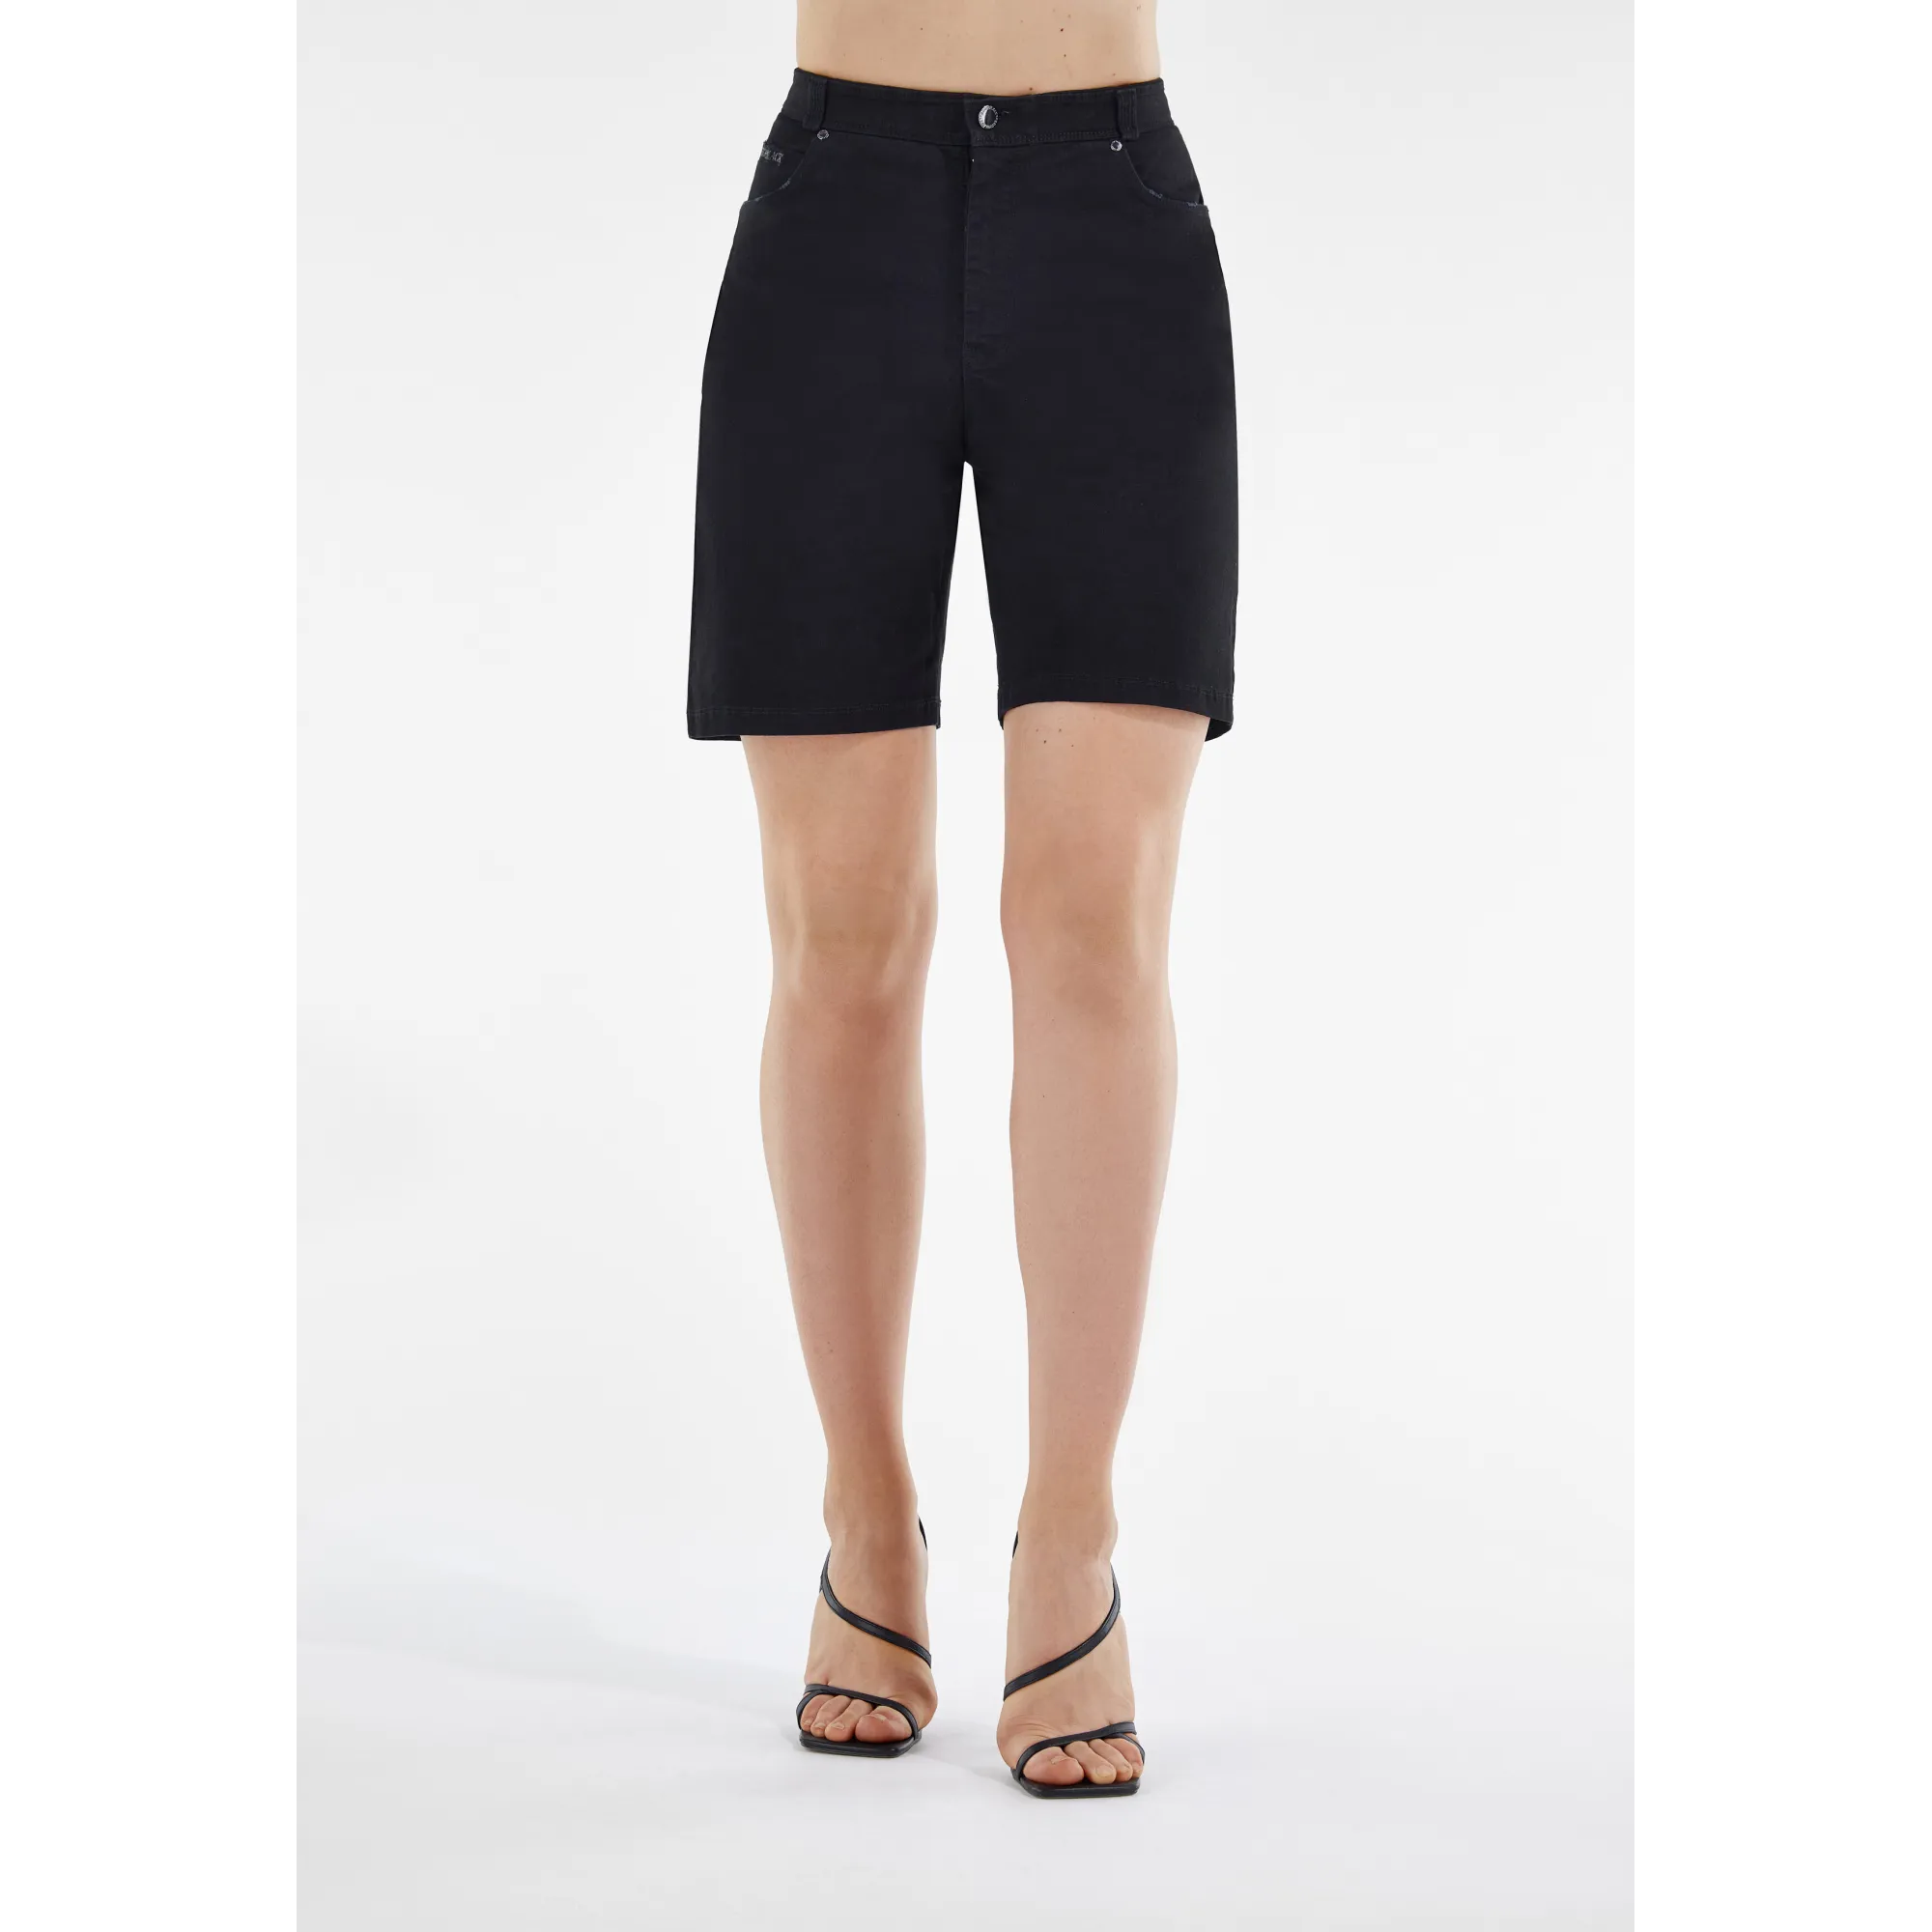 Freddy Damen Fit Jeans - Regular Waist Bermuda Shorts - Distressed Pocket - Schwarz - N0